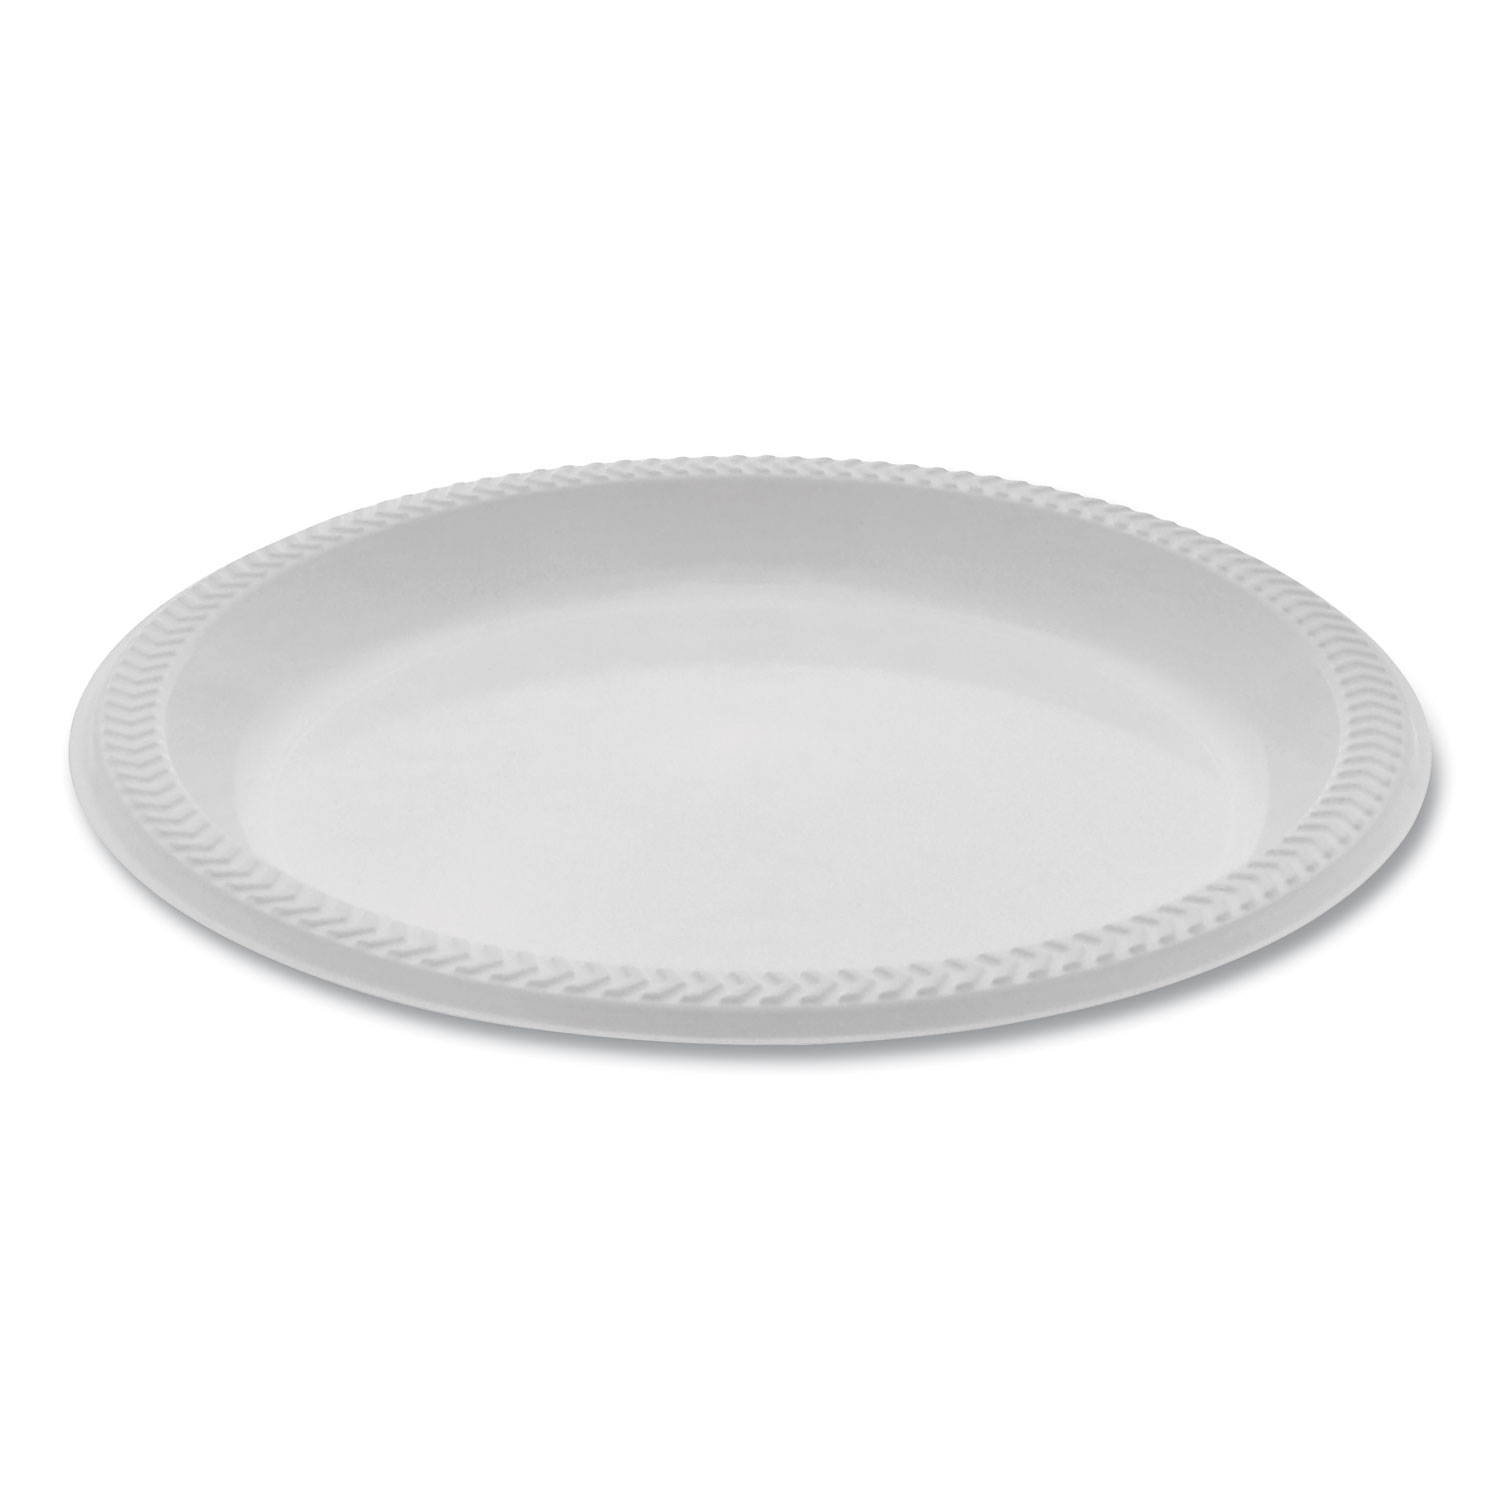 Pactiv Meadoware® OPS Dinnerware, Plate, 8.88 Diameter, White, 400/Carton